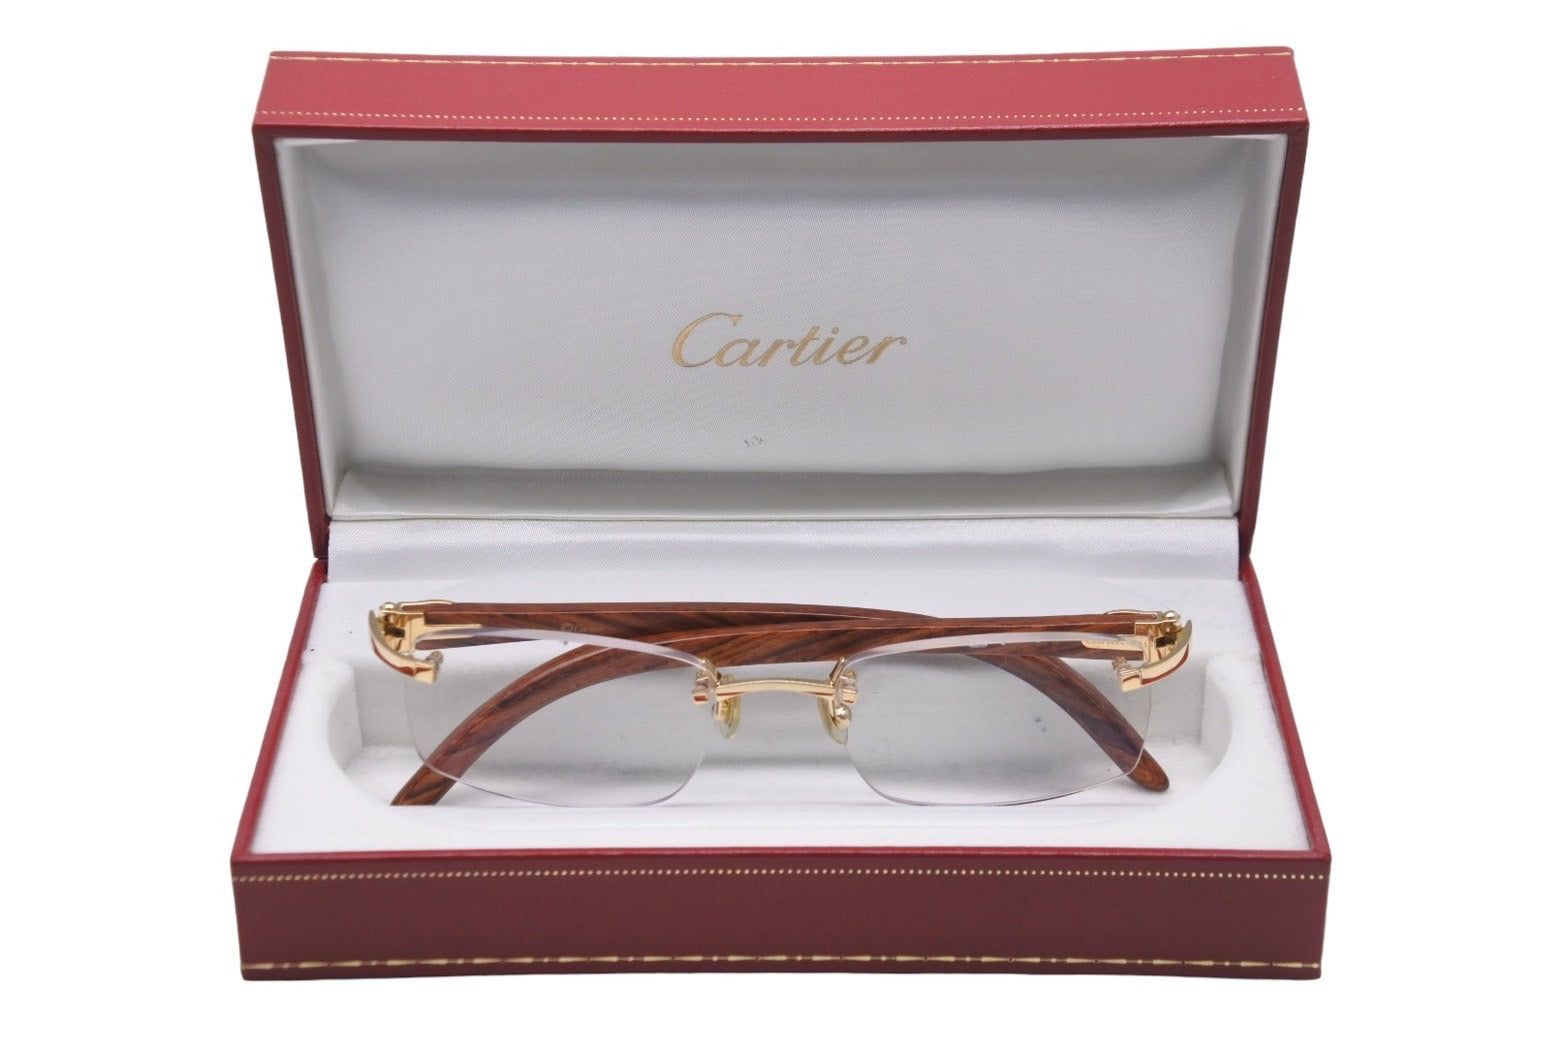 Cartierサングラス、美品、黒、1万円で購入可能でしょうか